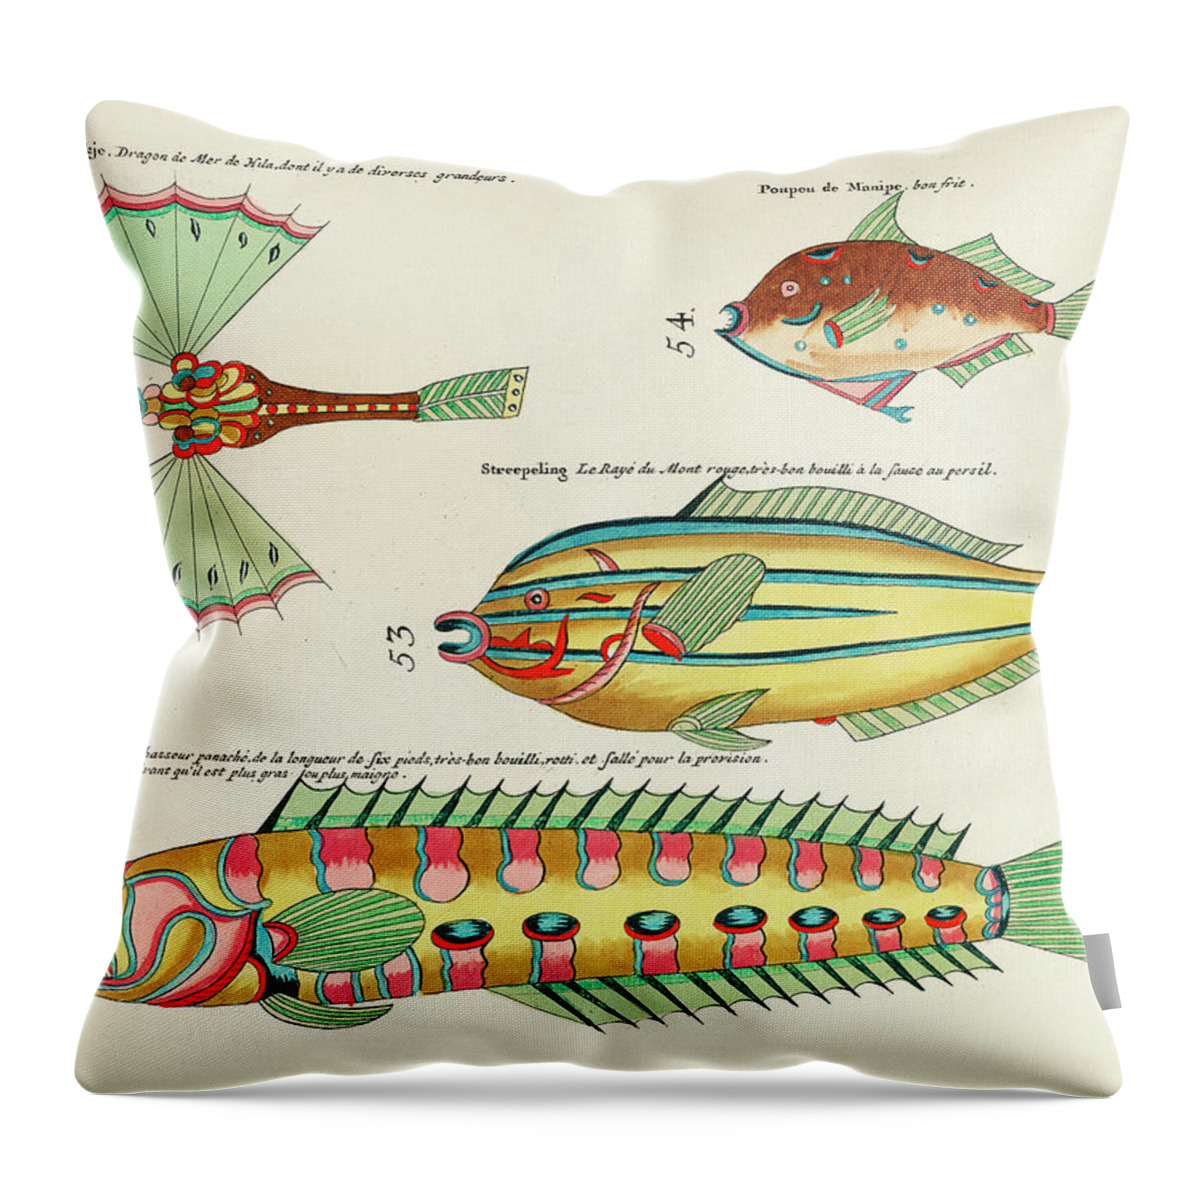 Fish Throw Pillow featuring the digital art Vintage, Whimsical Fish and Marine Life Illustration by Louis Renard - Sea Dragon, De Bonte Jager by Studio Grafiikka